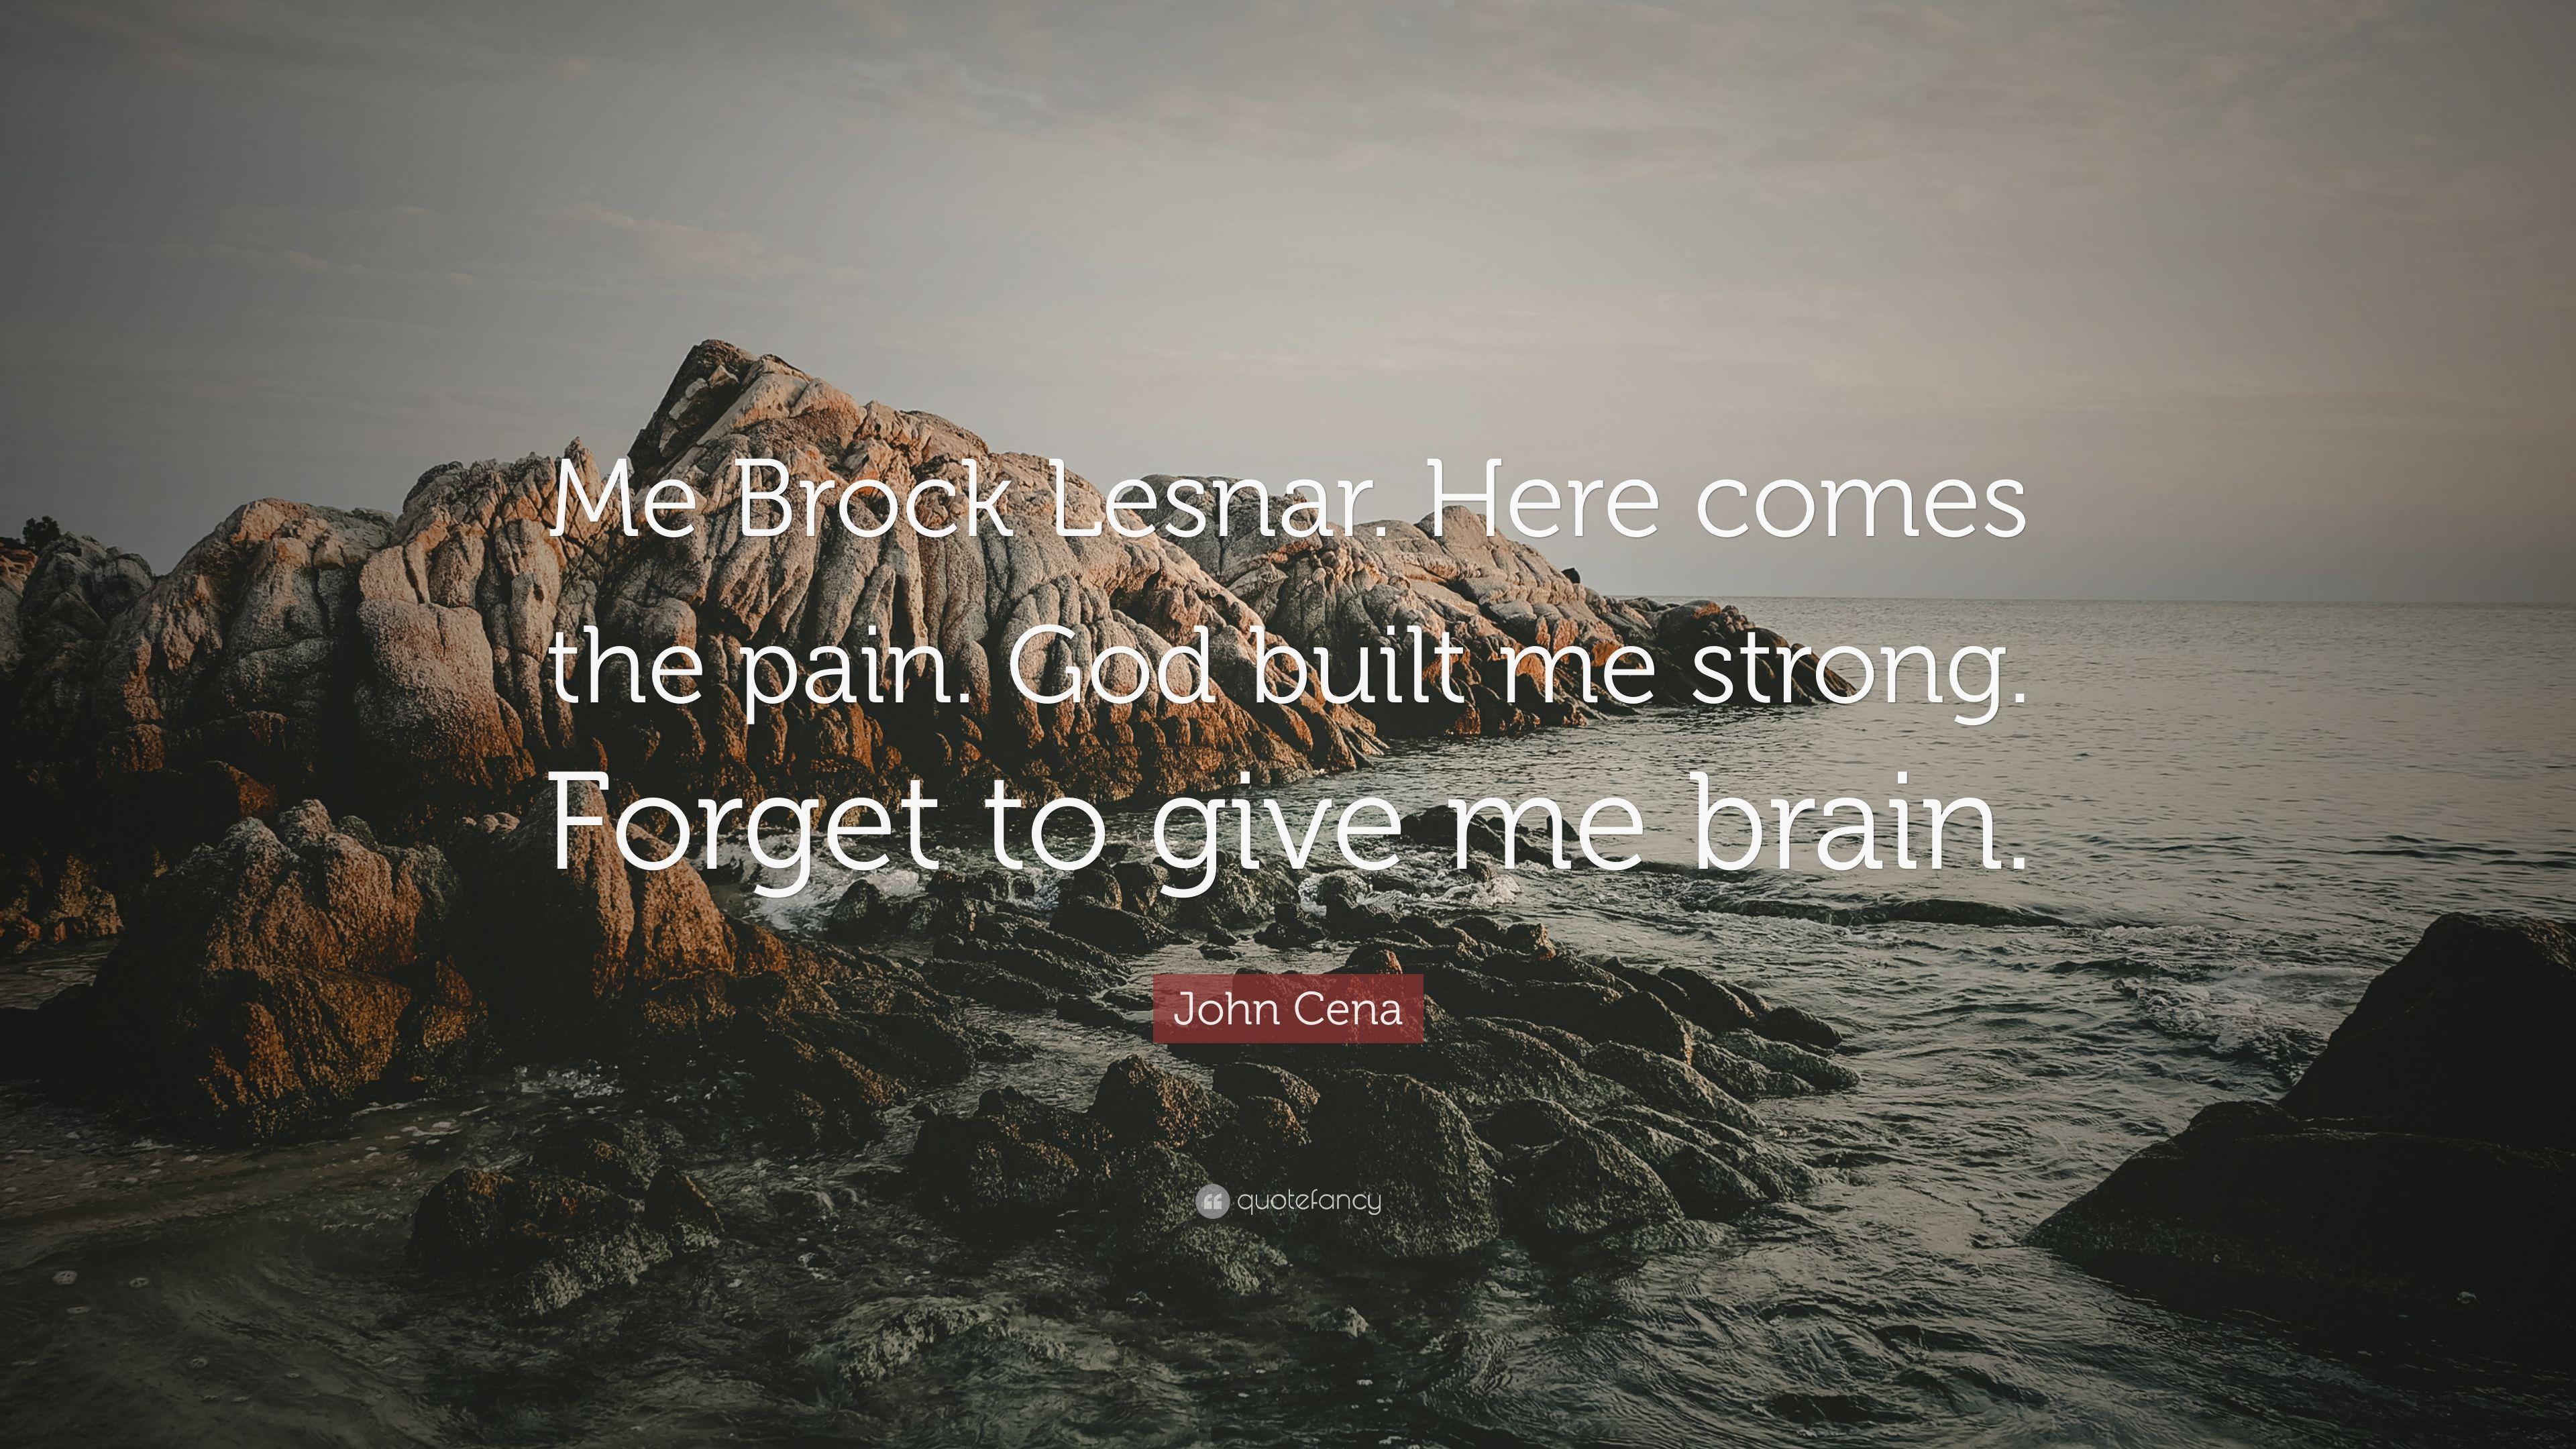 John Cena Quote: “Me Brock Lesnar. Here comes the pain. God built me